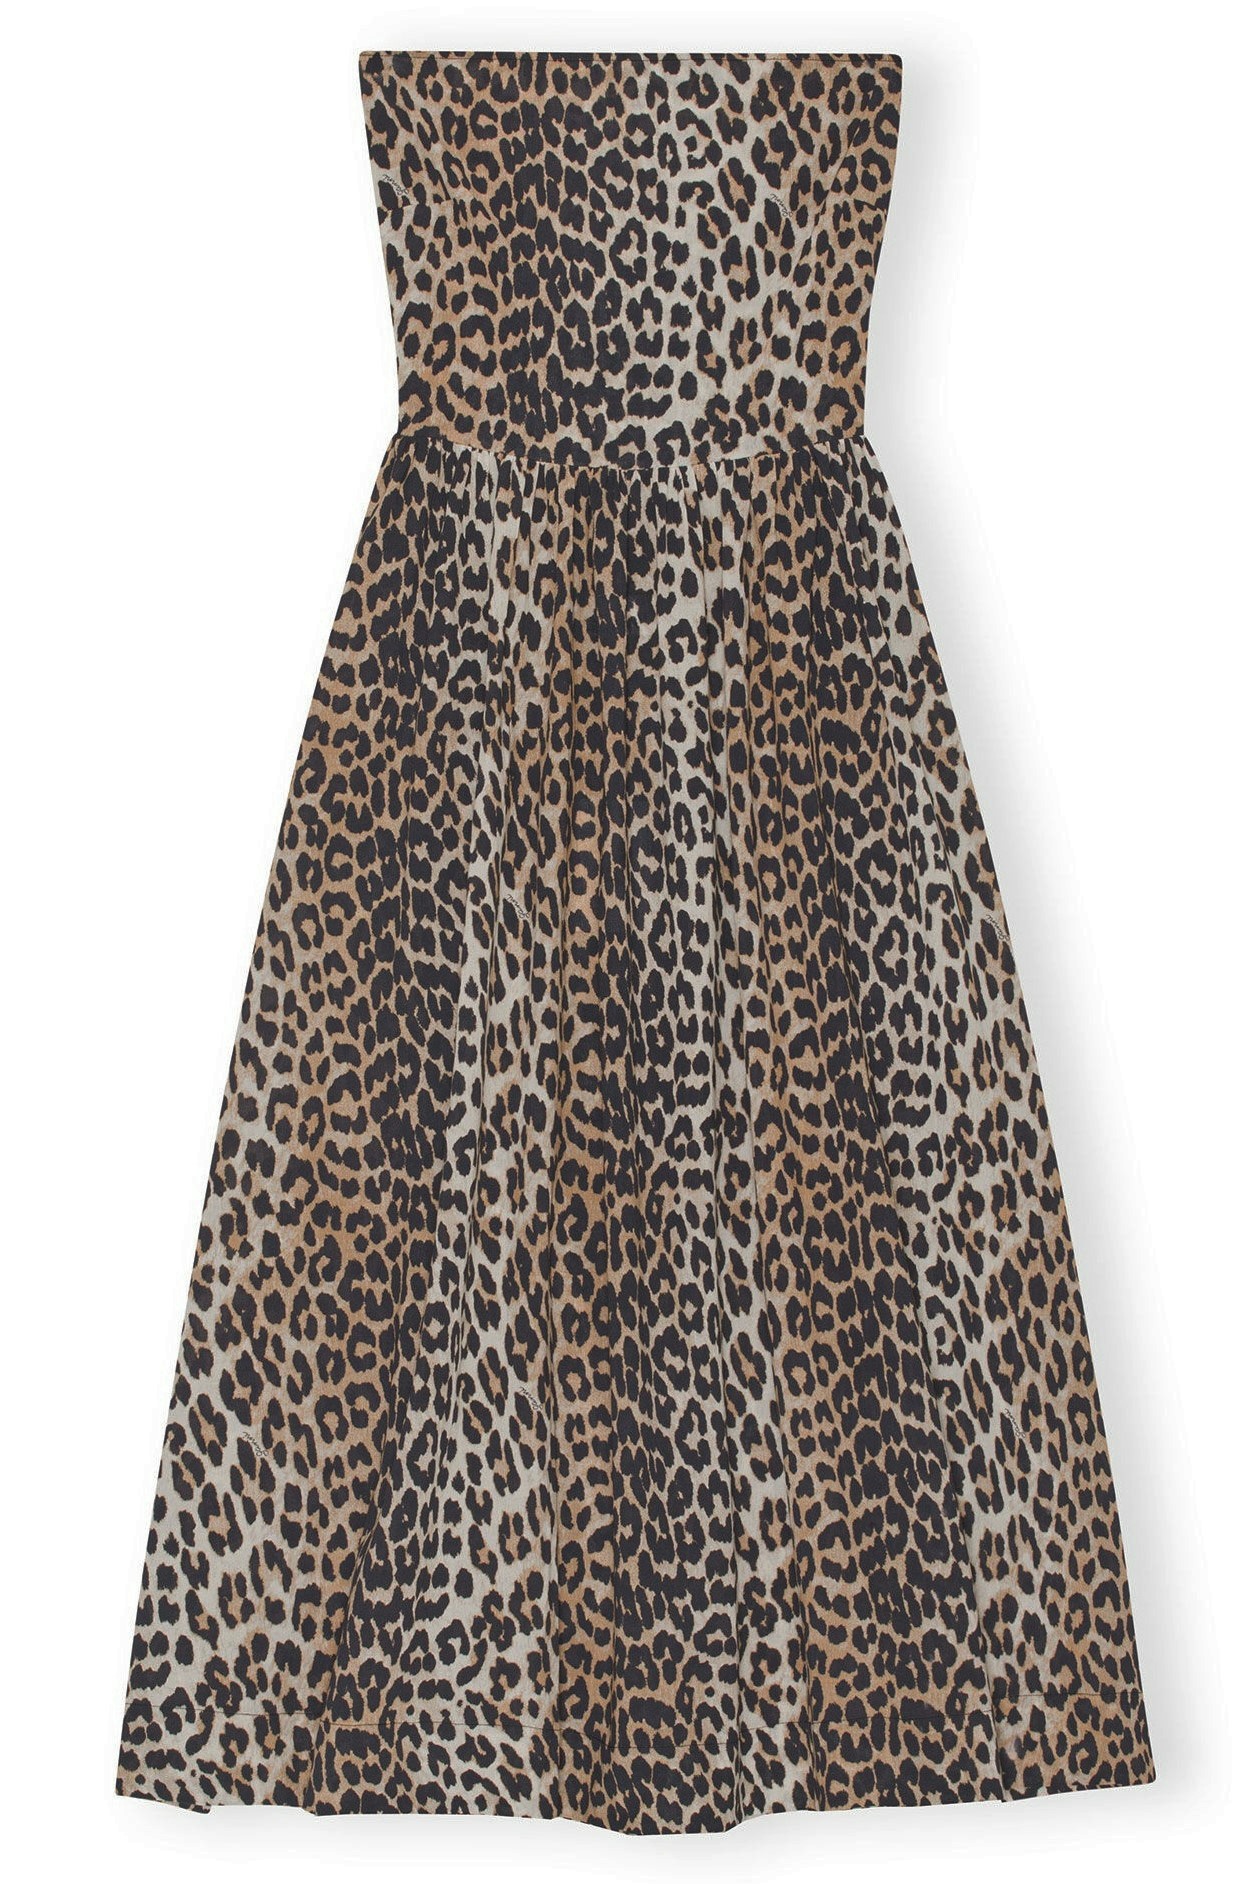 GANNI Light Cotton Tieband Multifunctional Dress in Leopard